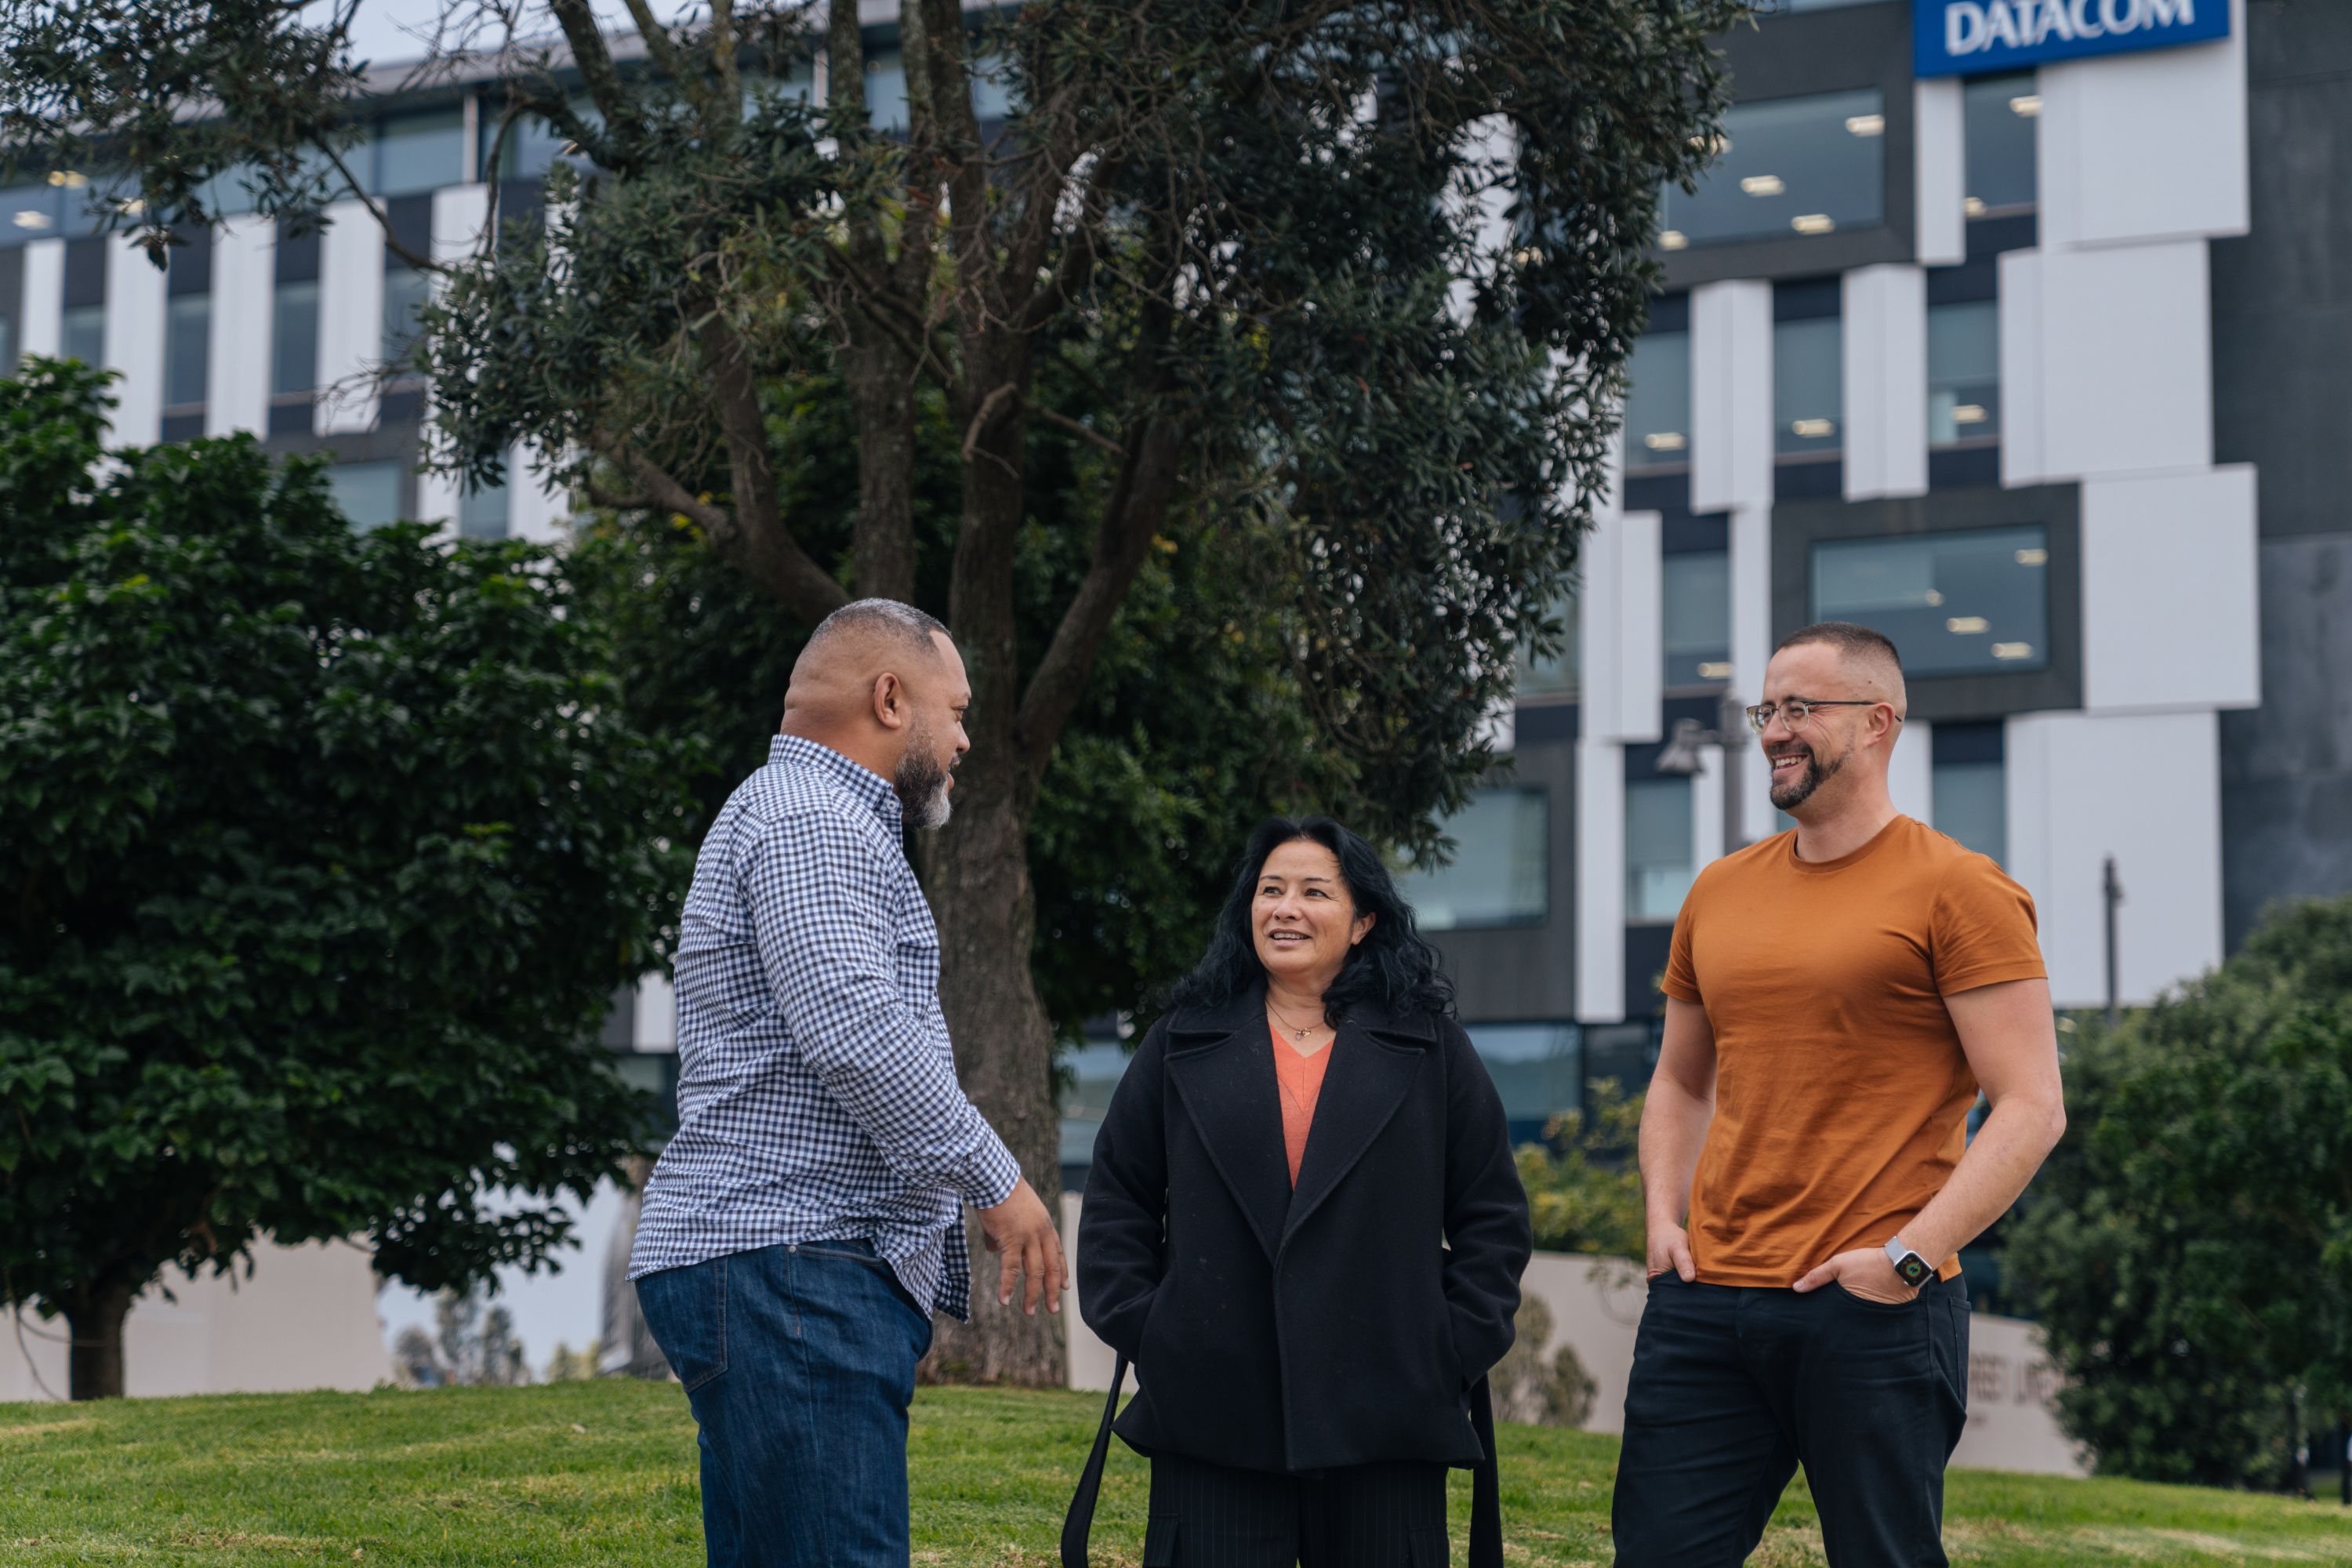 Photo of Amato Funaki, Linda Te Maipi, and James David talking outside the Datacom office